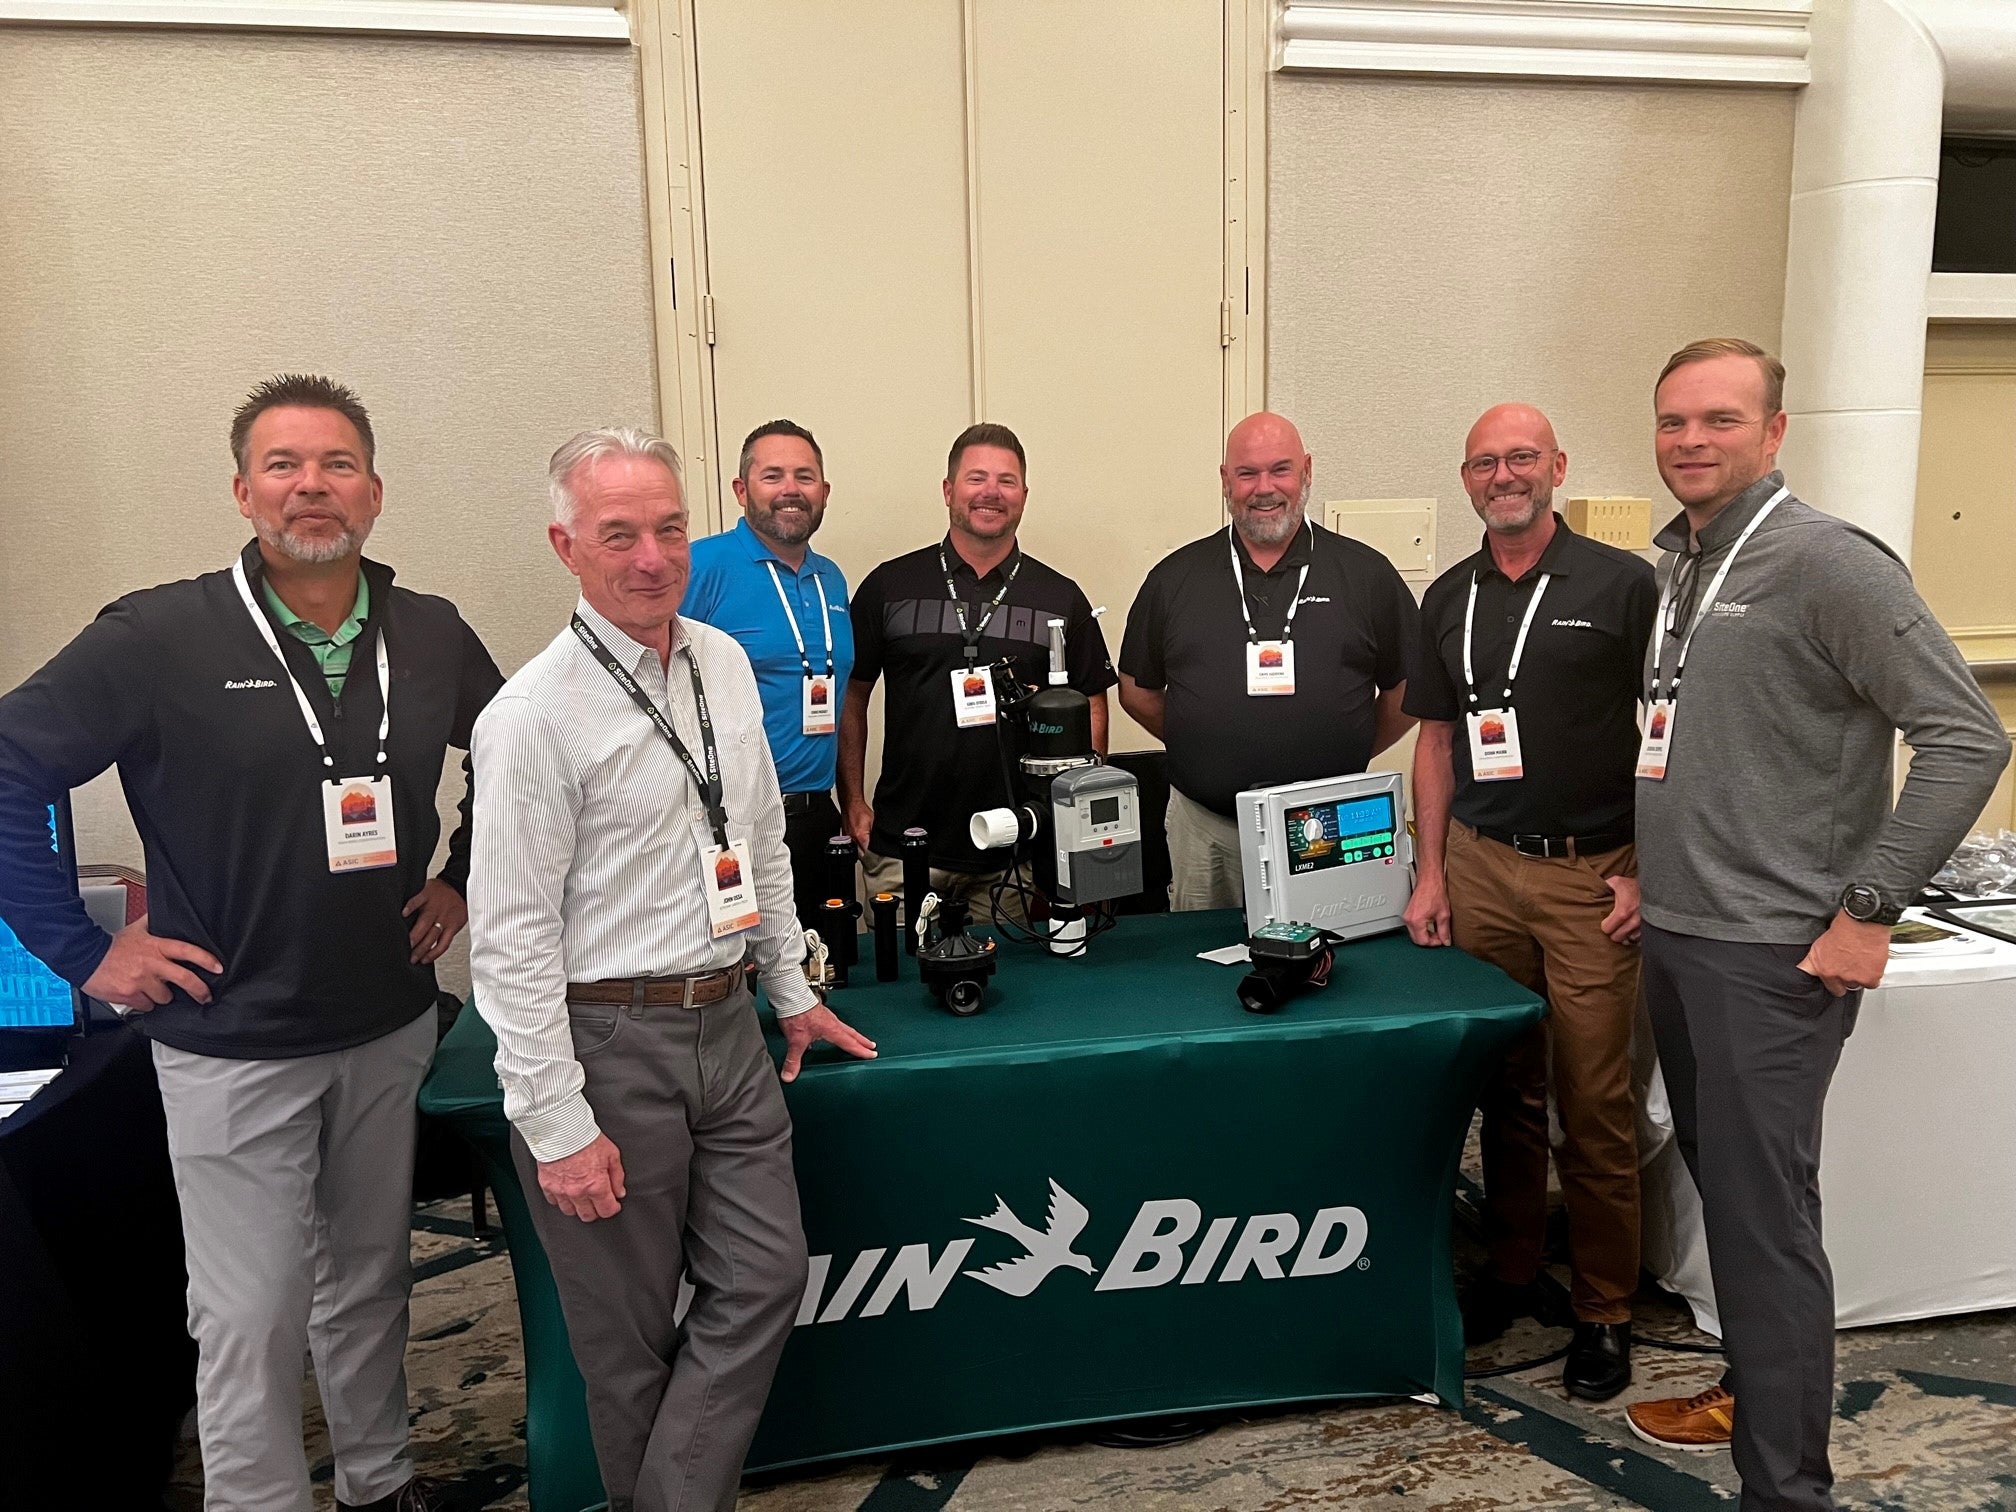 Rain Bird team stands by a product table with a green Rain Bird table cloth.